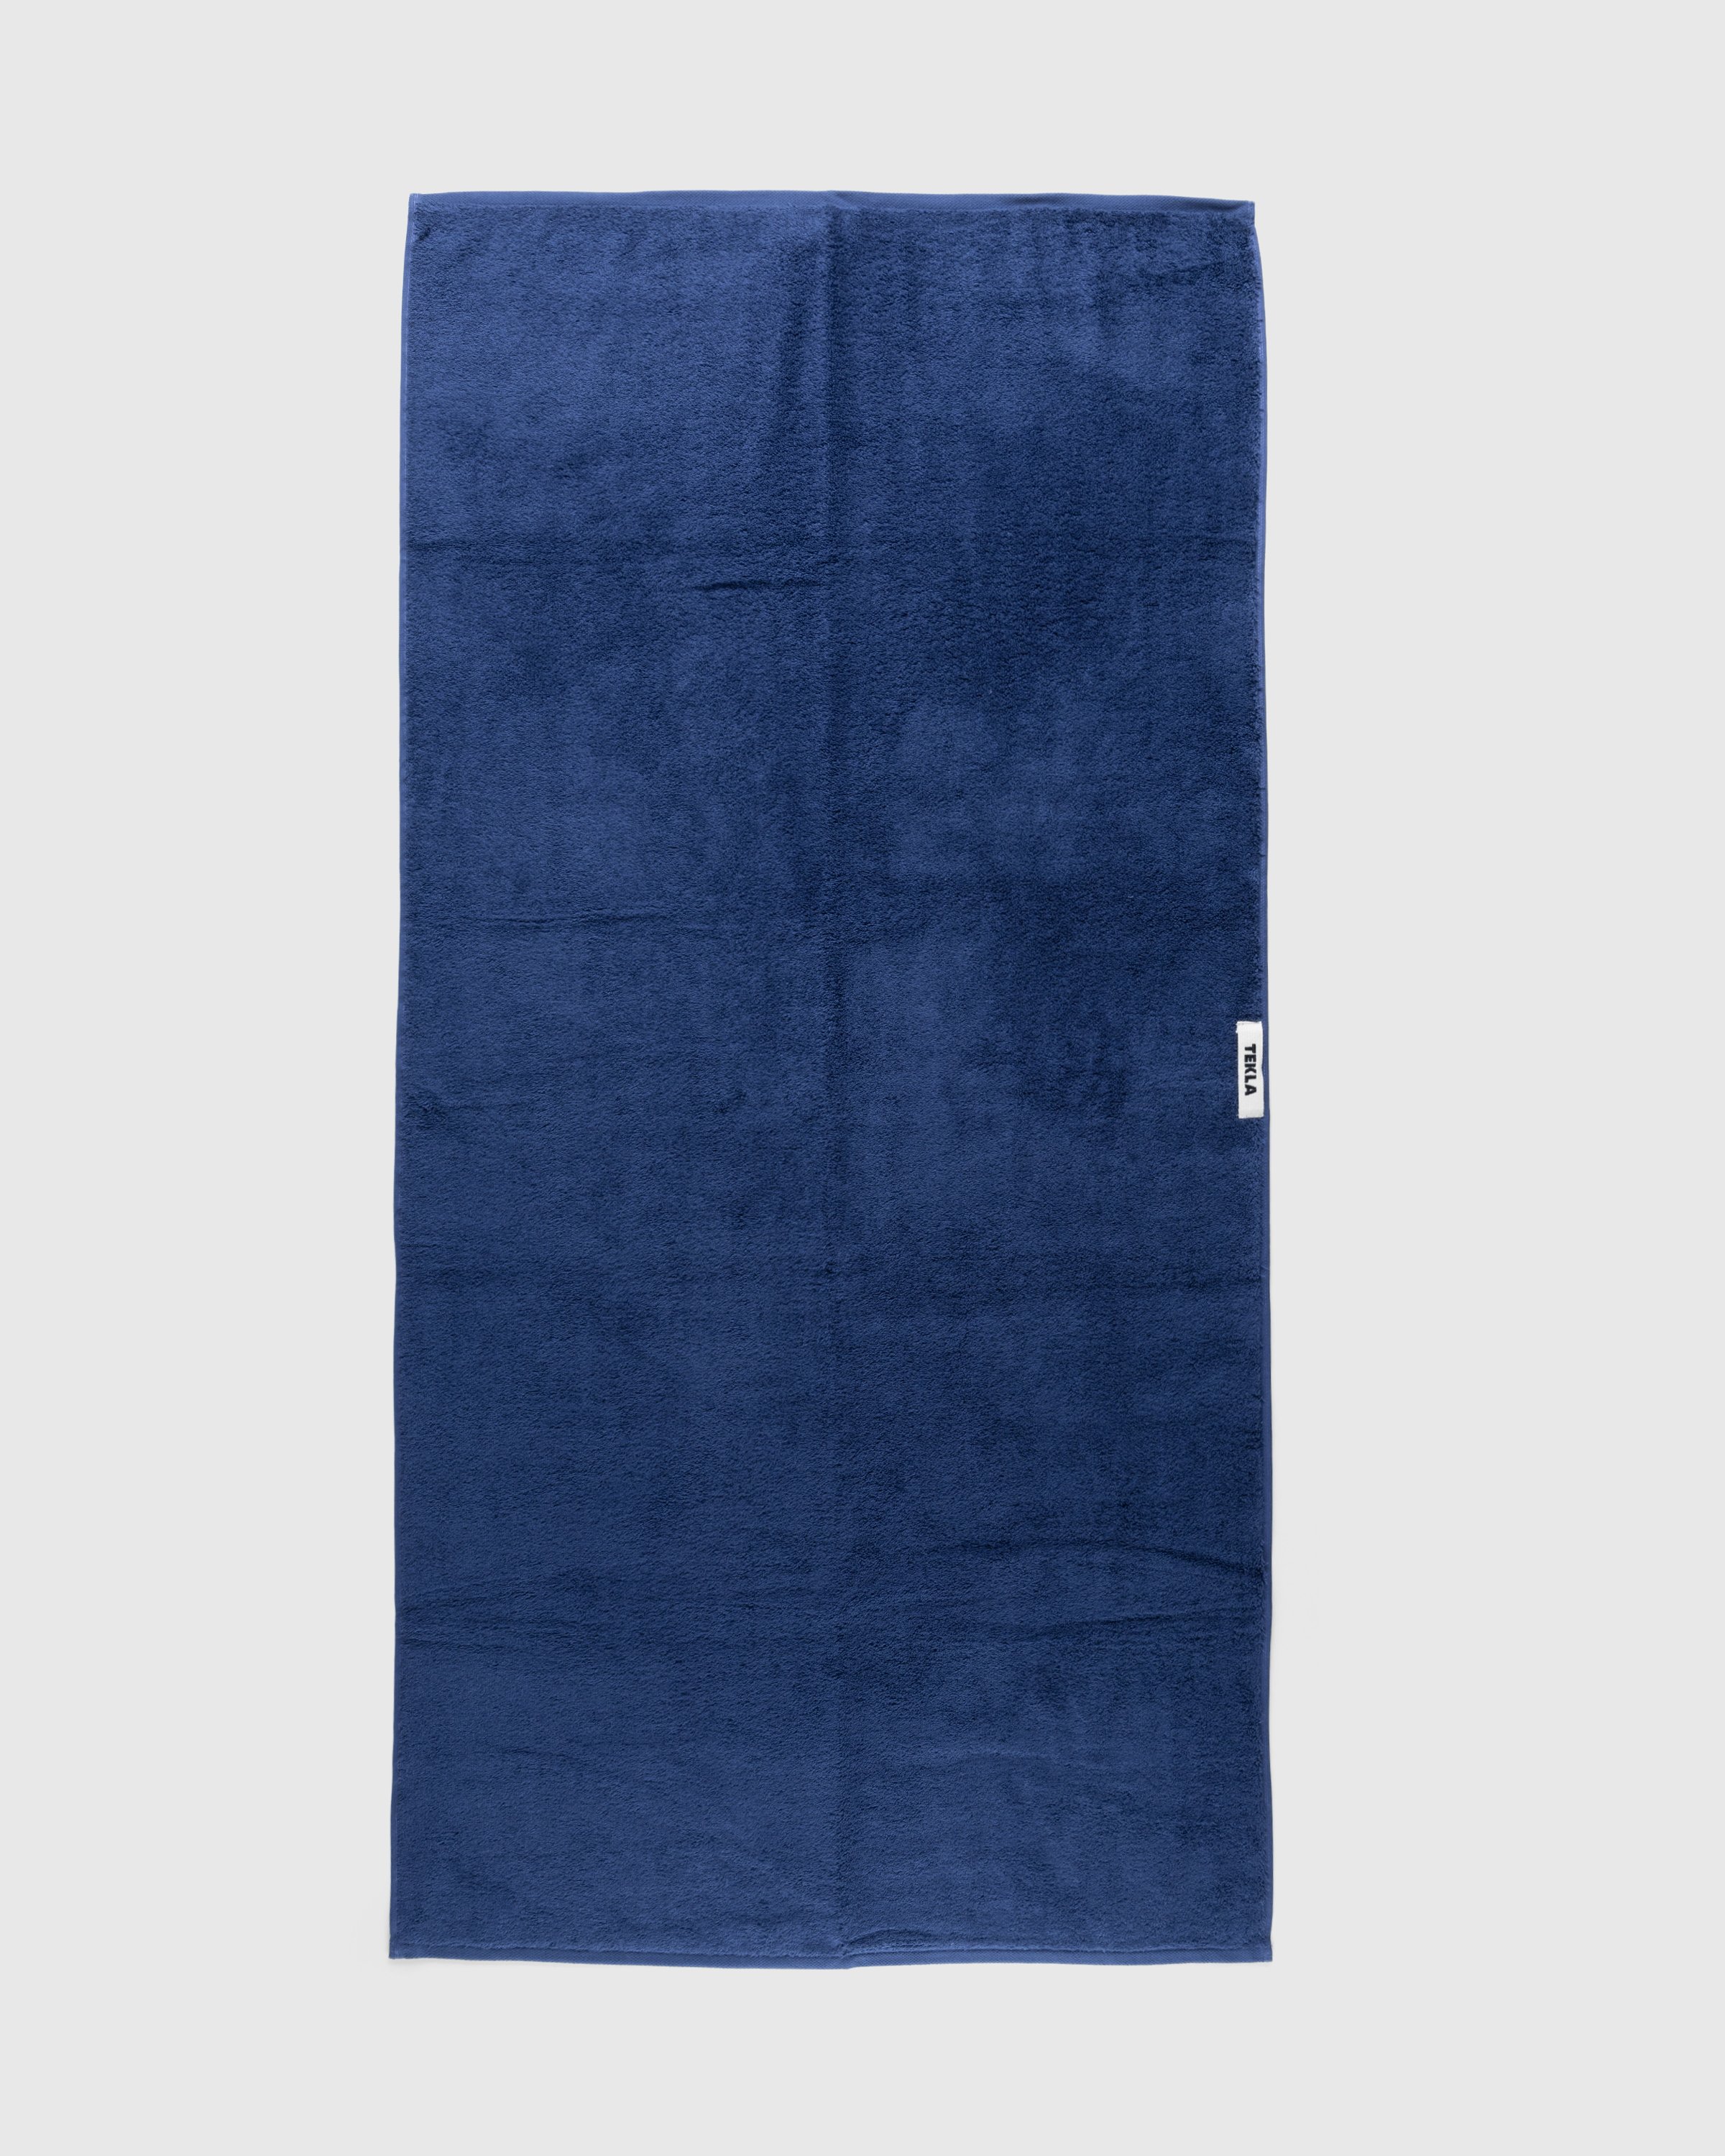 Tekla - Bath Towel 70x140 Navy - Lifestyle - Blue - Image 2